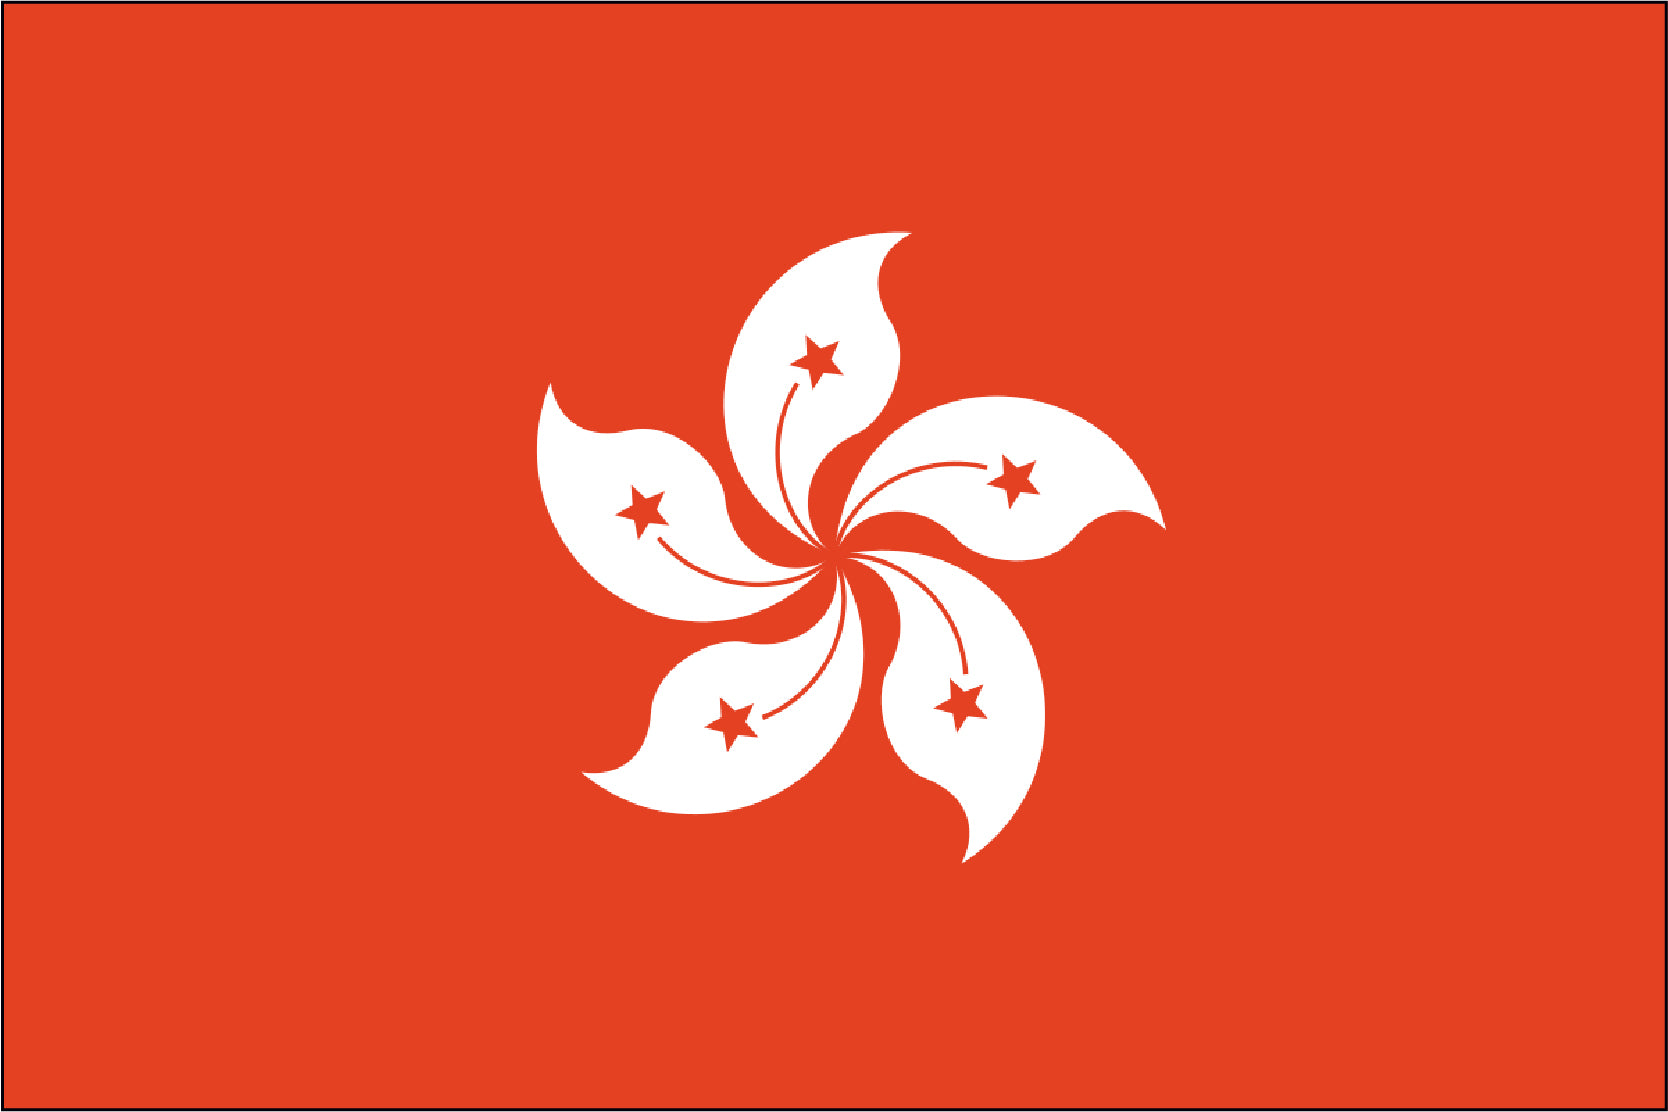 Hong Kong Miniature Flag 4